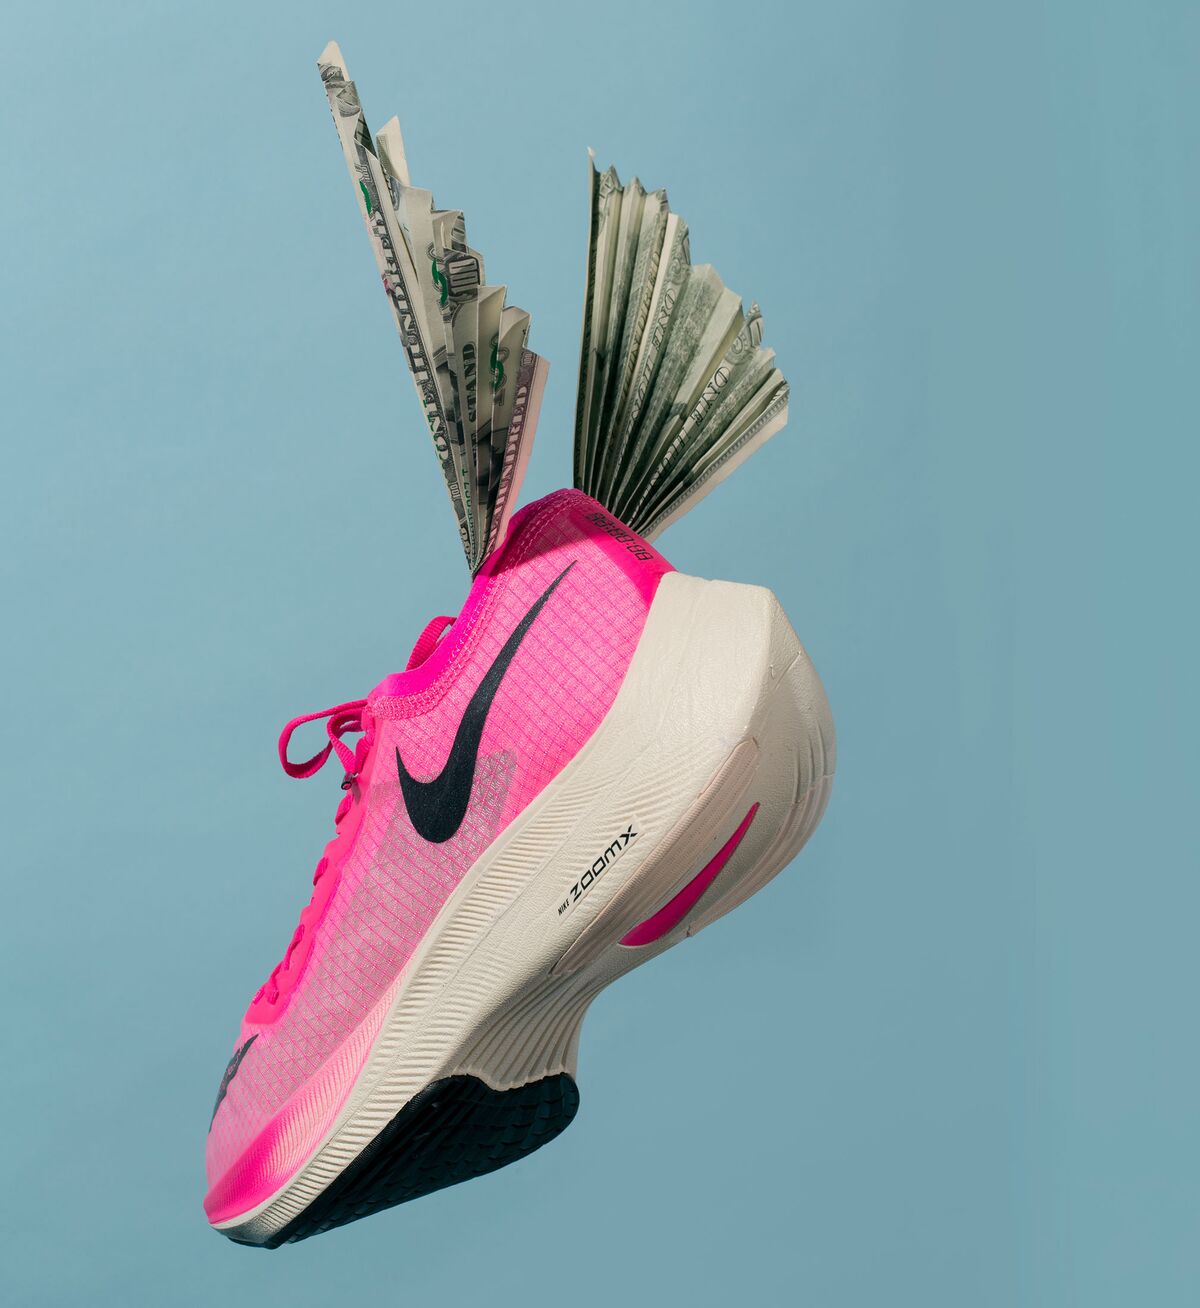 Seducir Nominal Ártico Nike's Vaporfly Tests the Boundaries of the Running Shoe - Bloomberg